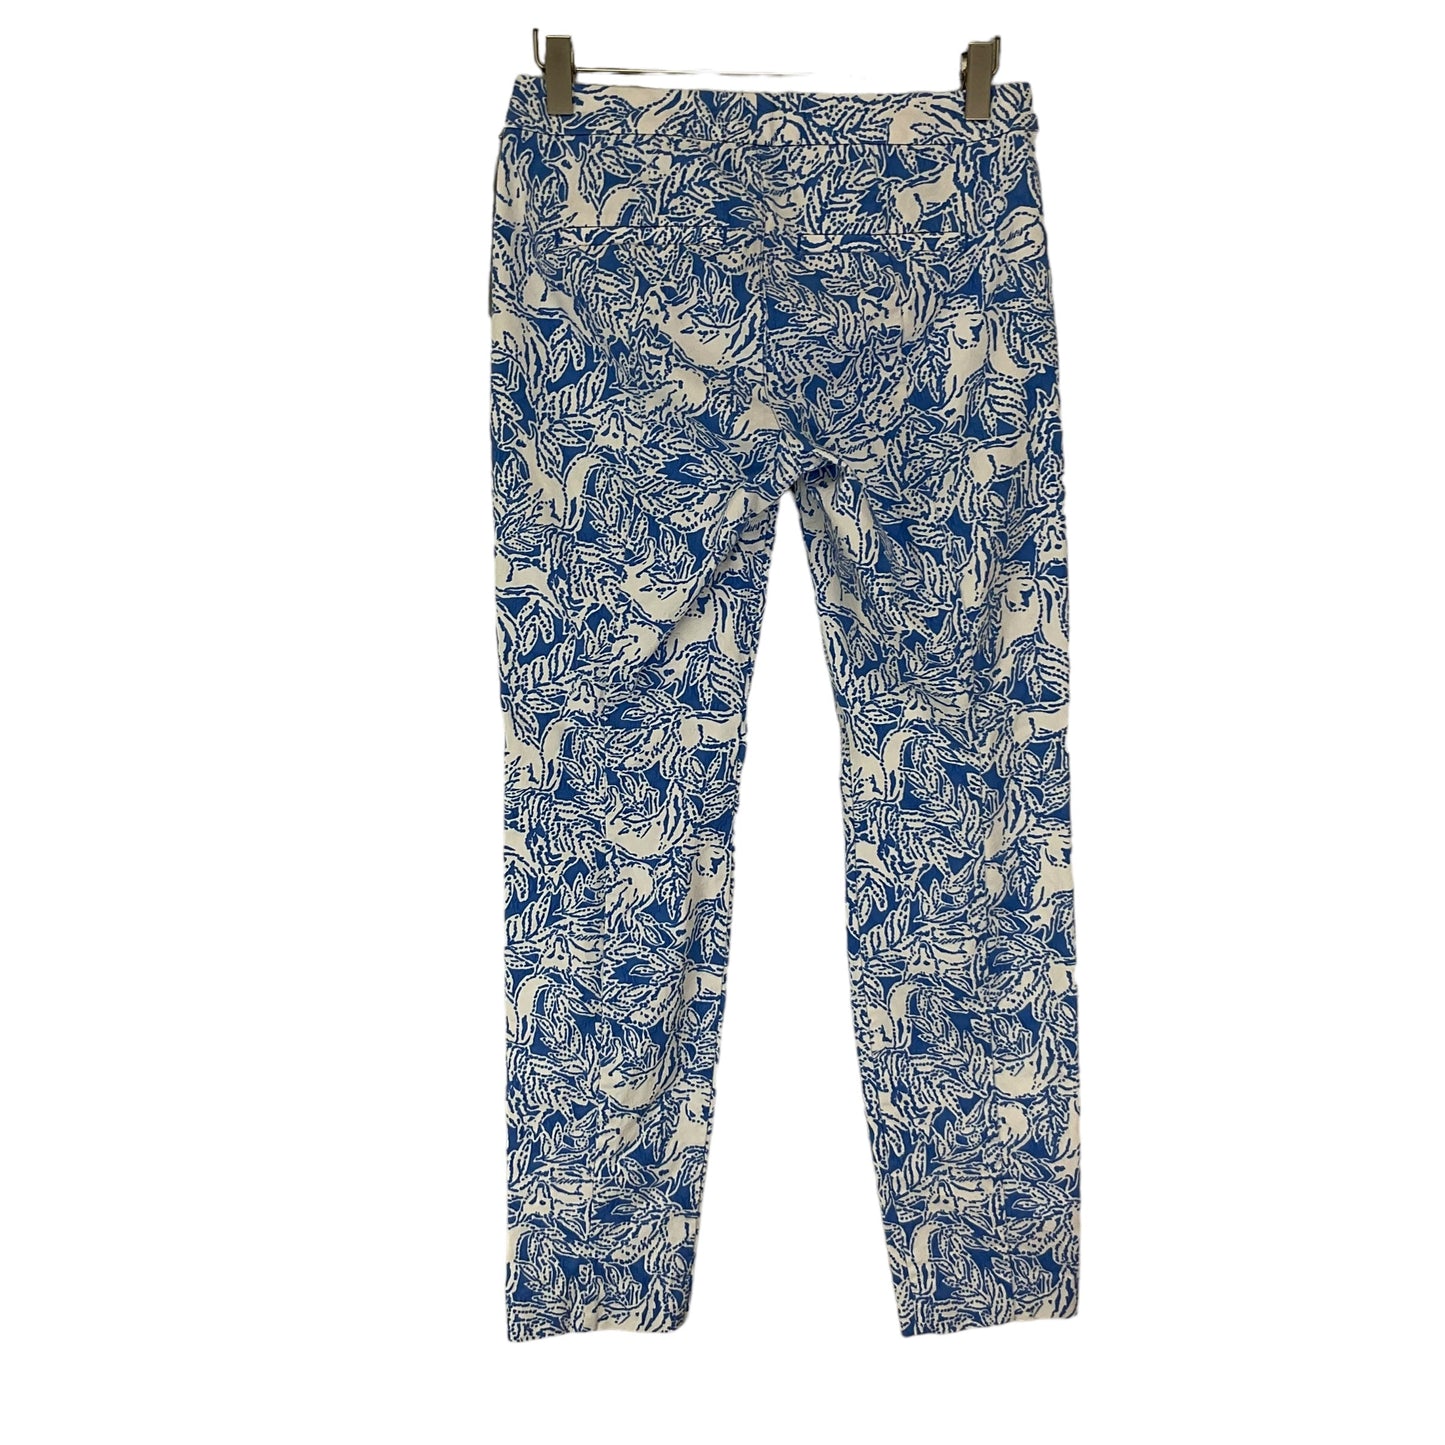 Blue & White Pants Designer Lilly Pulitzer, Size 2